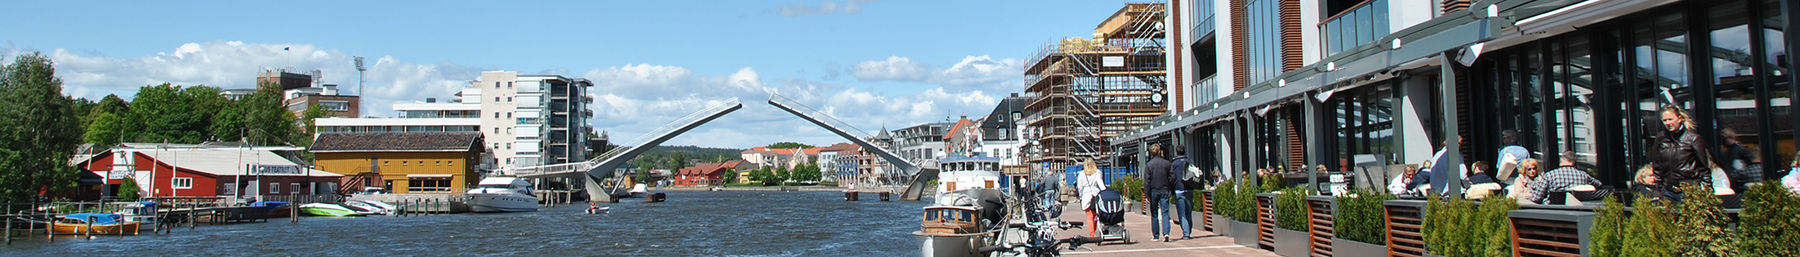 Fredrikstad banner.jpg